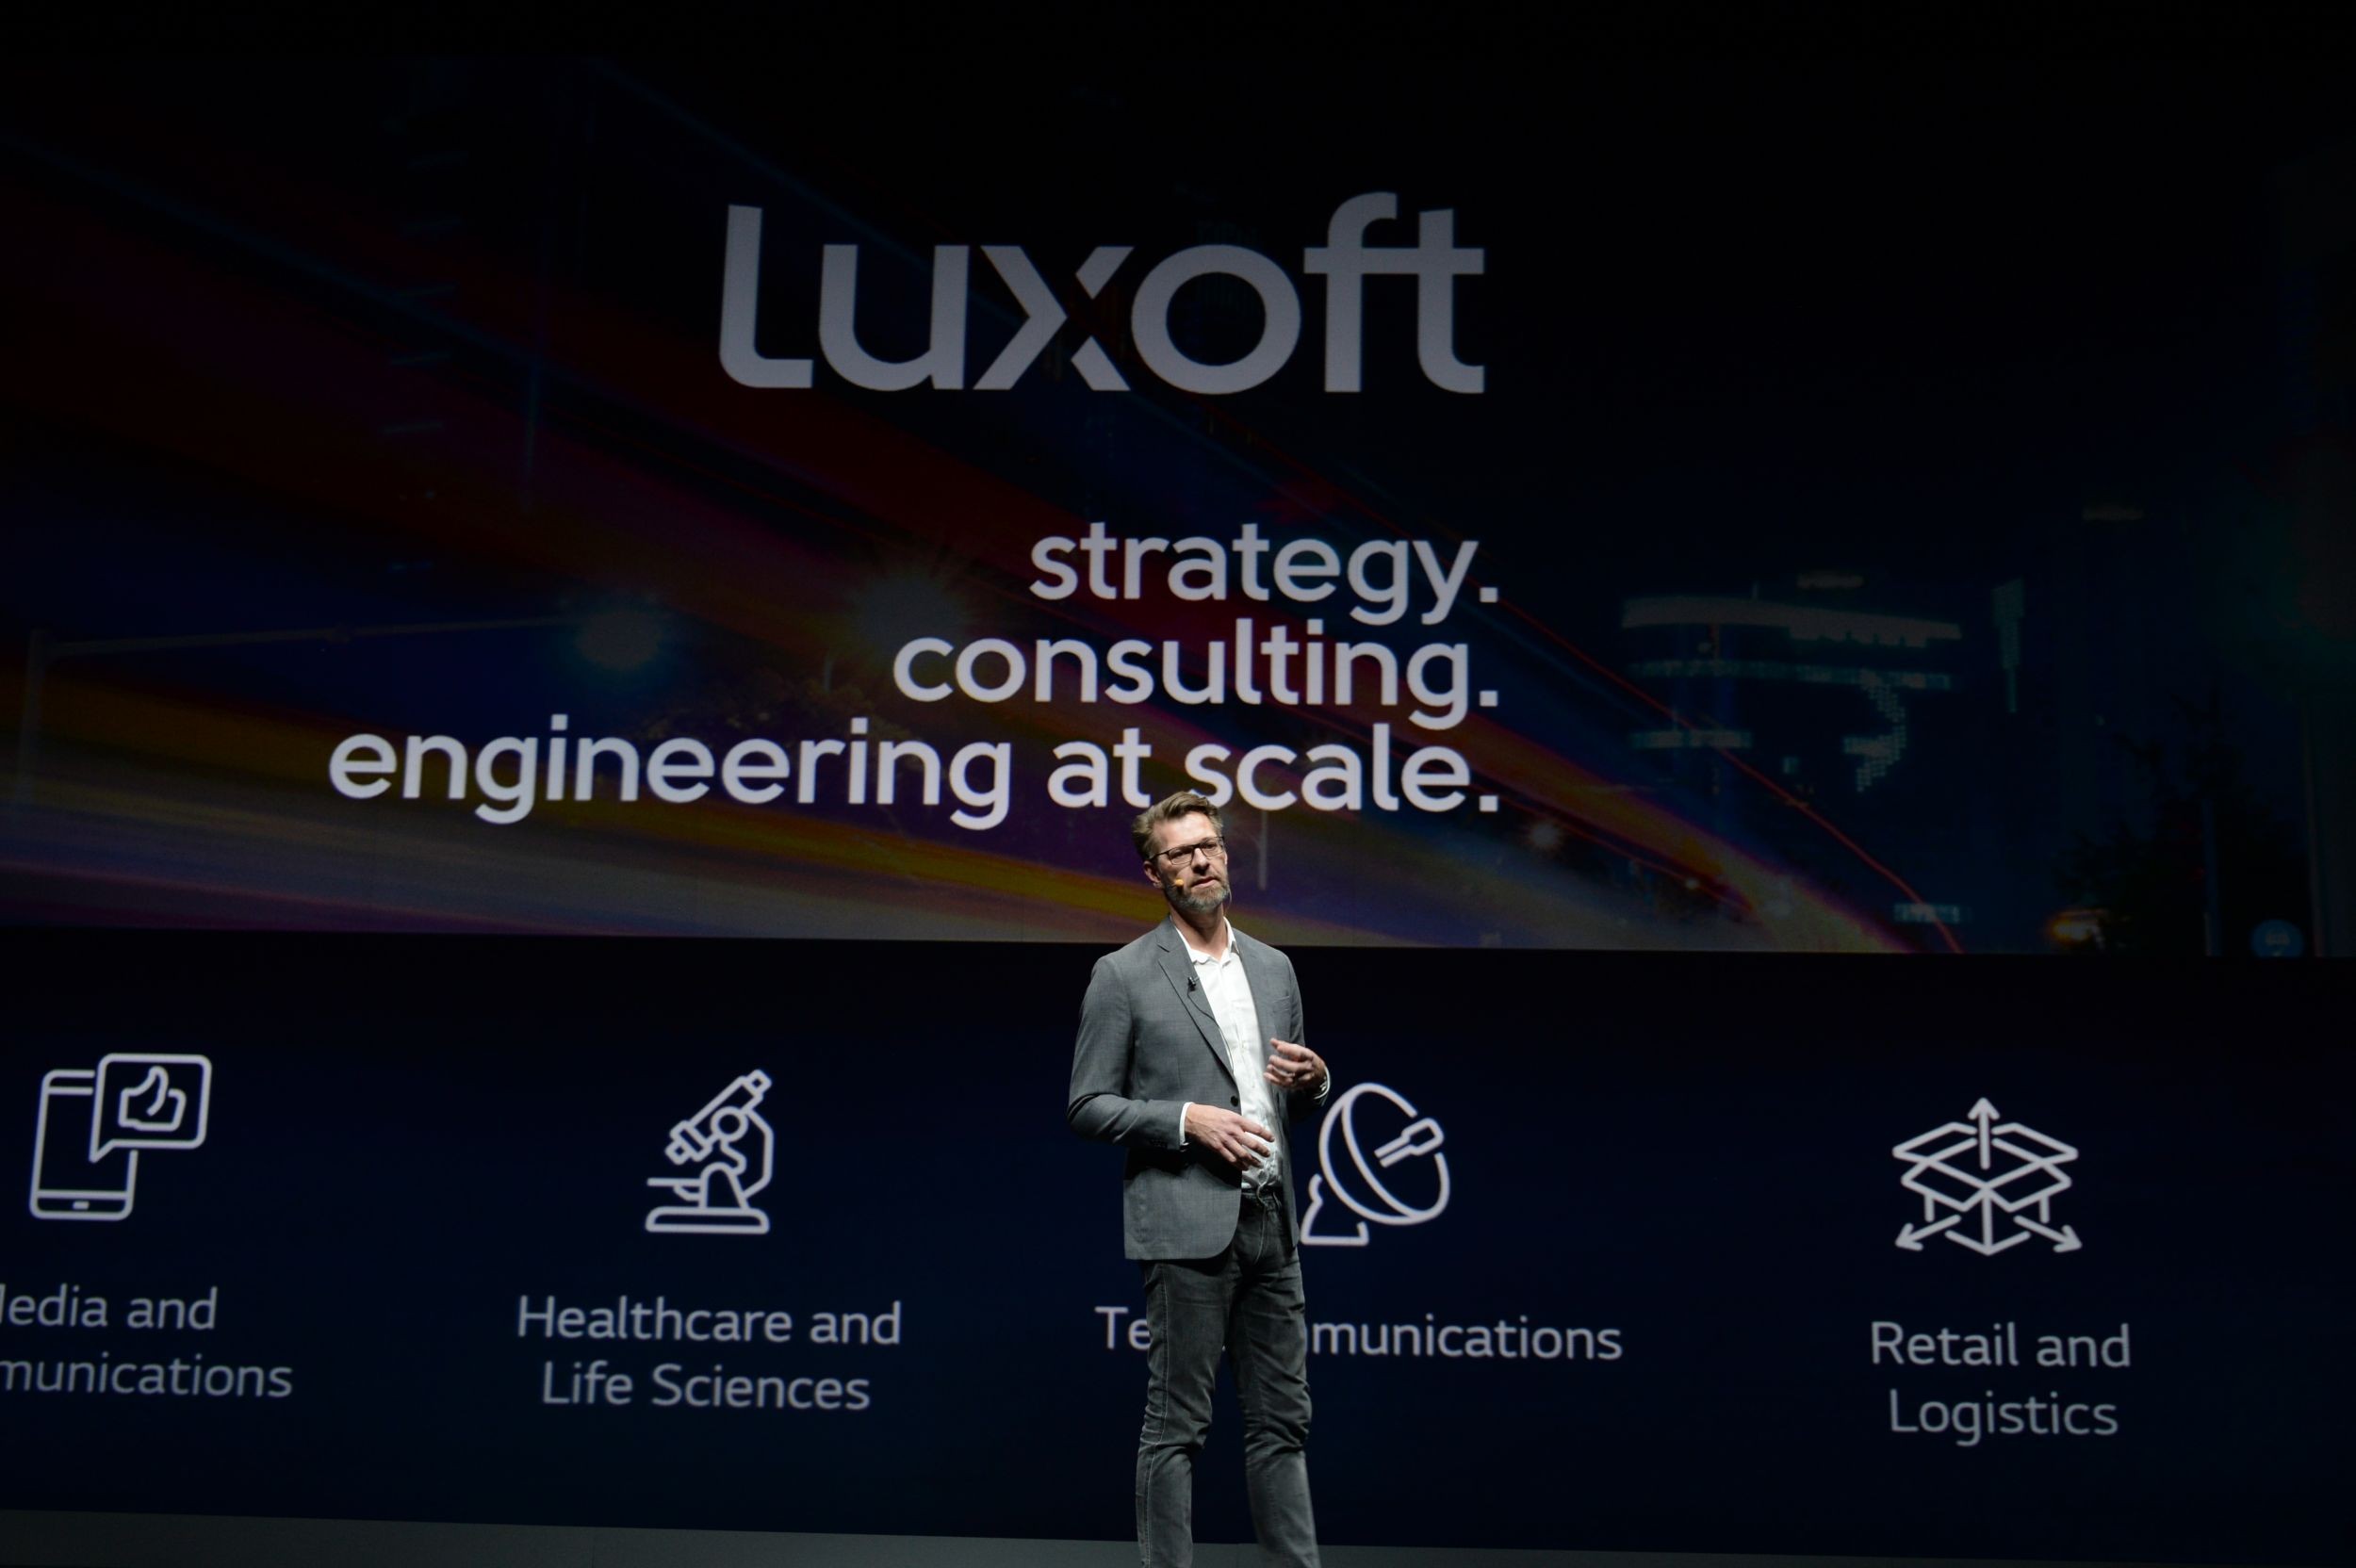 Mr. Alwin Bakkenes, managing director of automotive at Luxoft, delivers the keynote address.